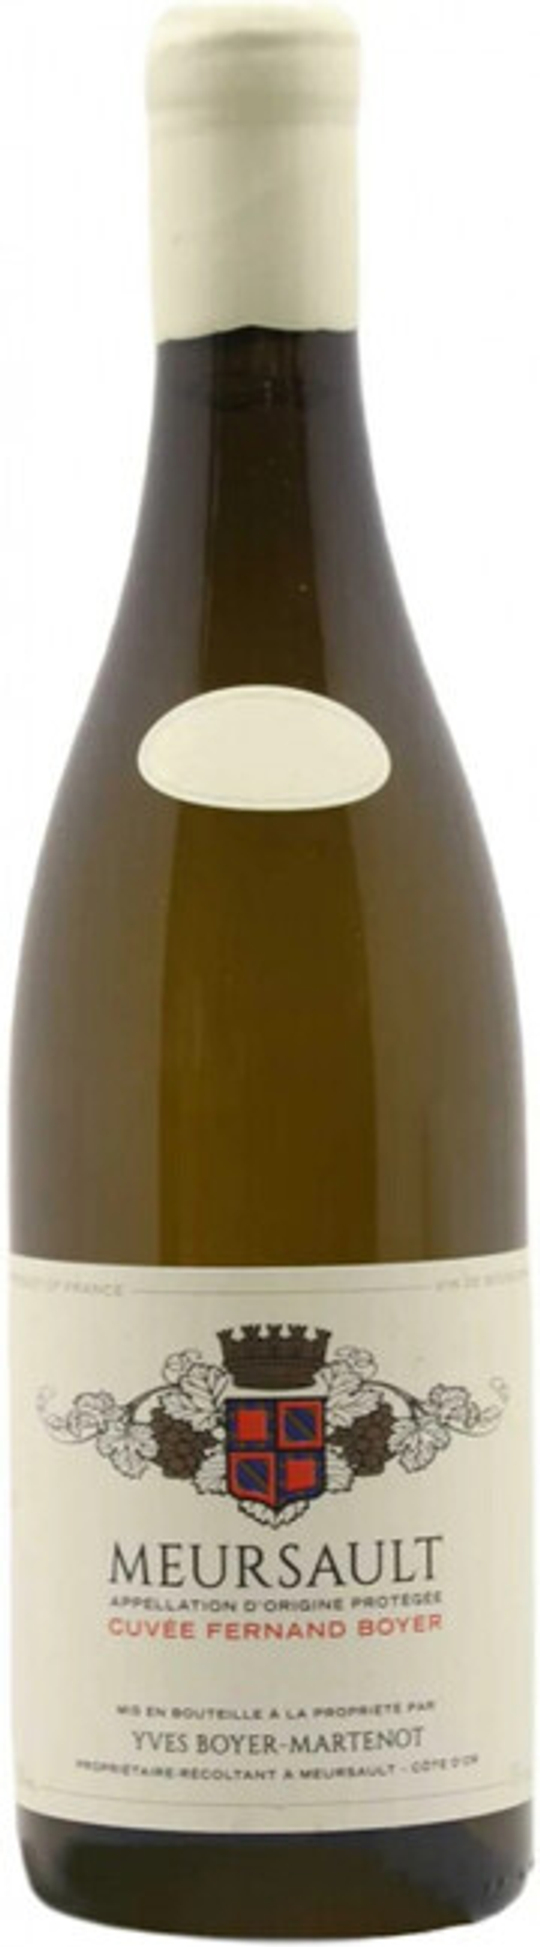 Вино Yves Boyer-Martenot Meursault Cuvee Fernand Boyer" AOP, 0,75 л.